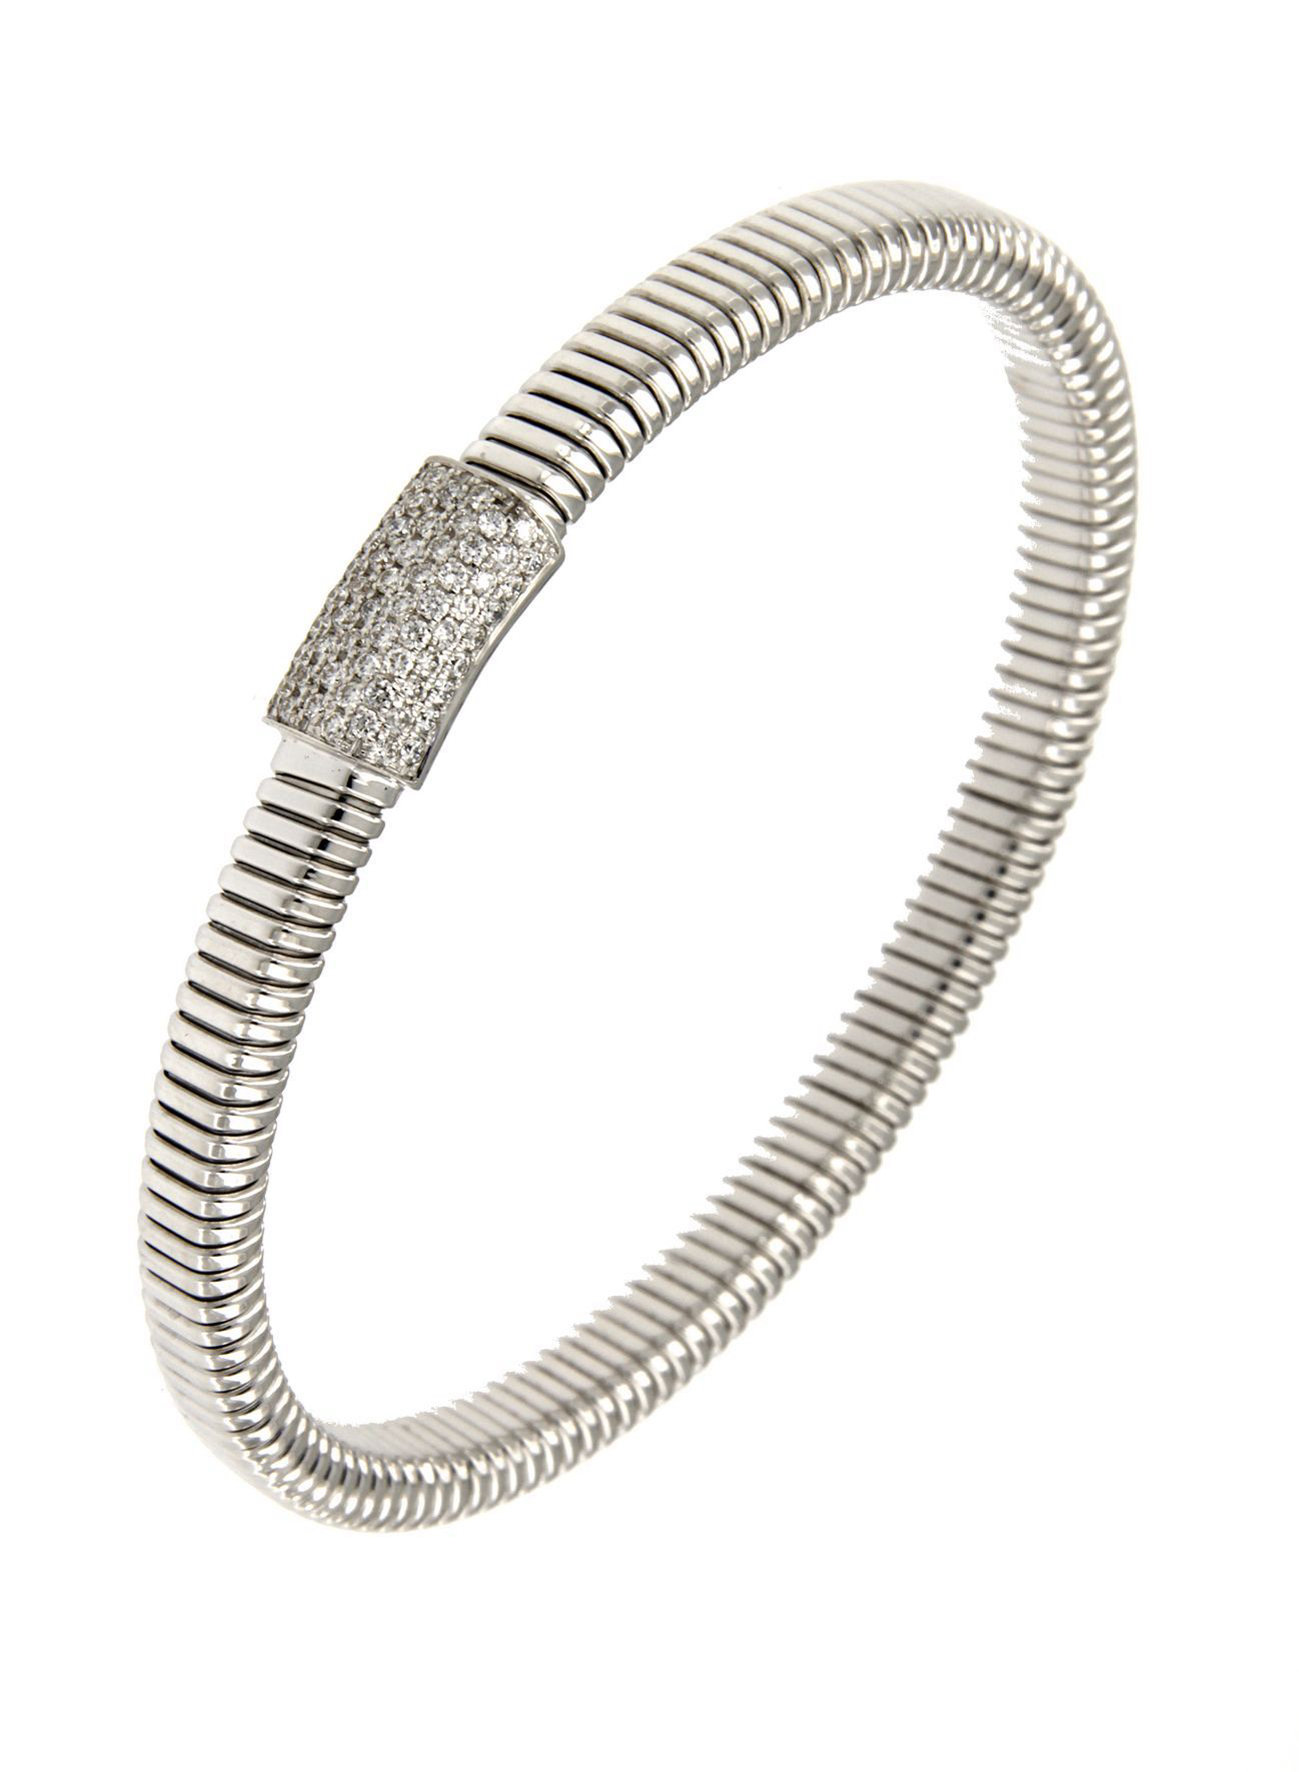 Semi-rigid Antorà bracelet in white gold with 5797 diamond clasp